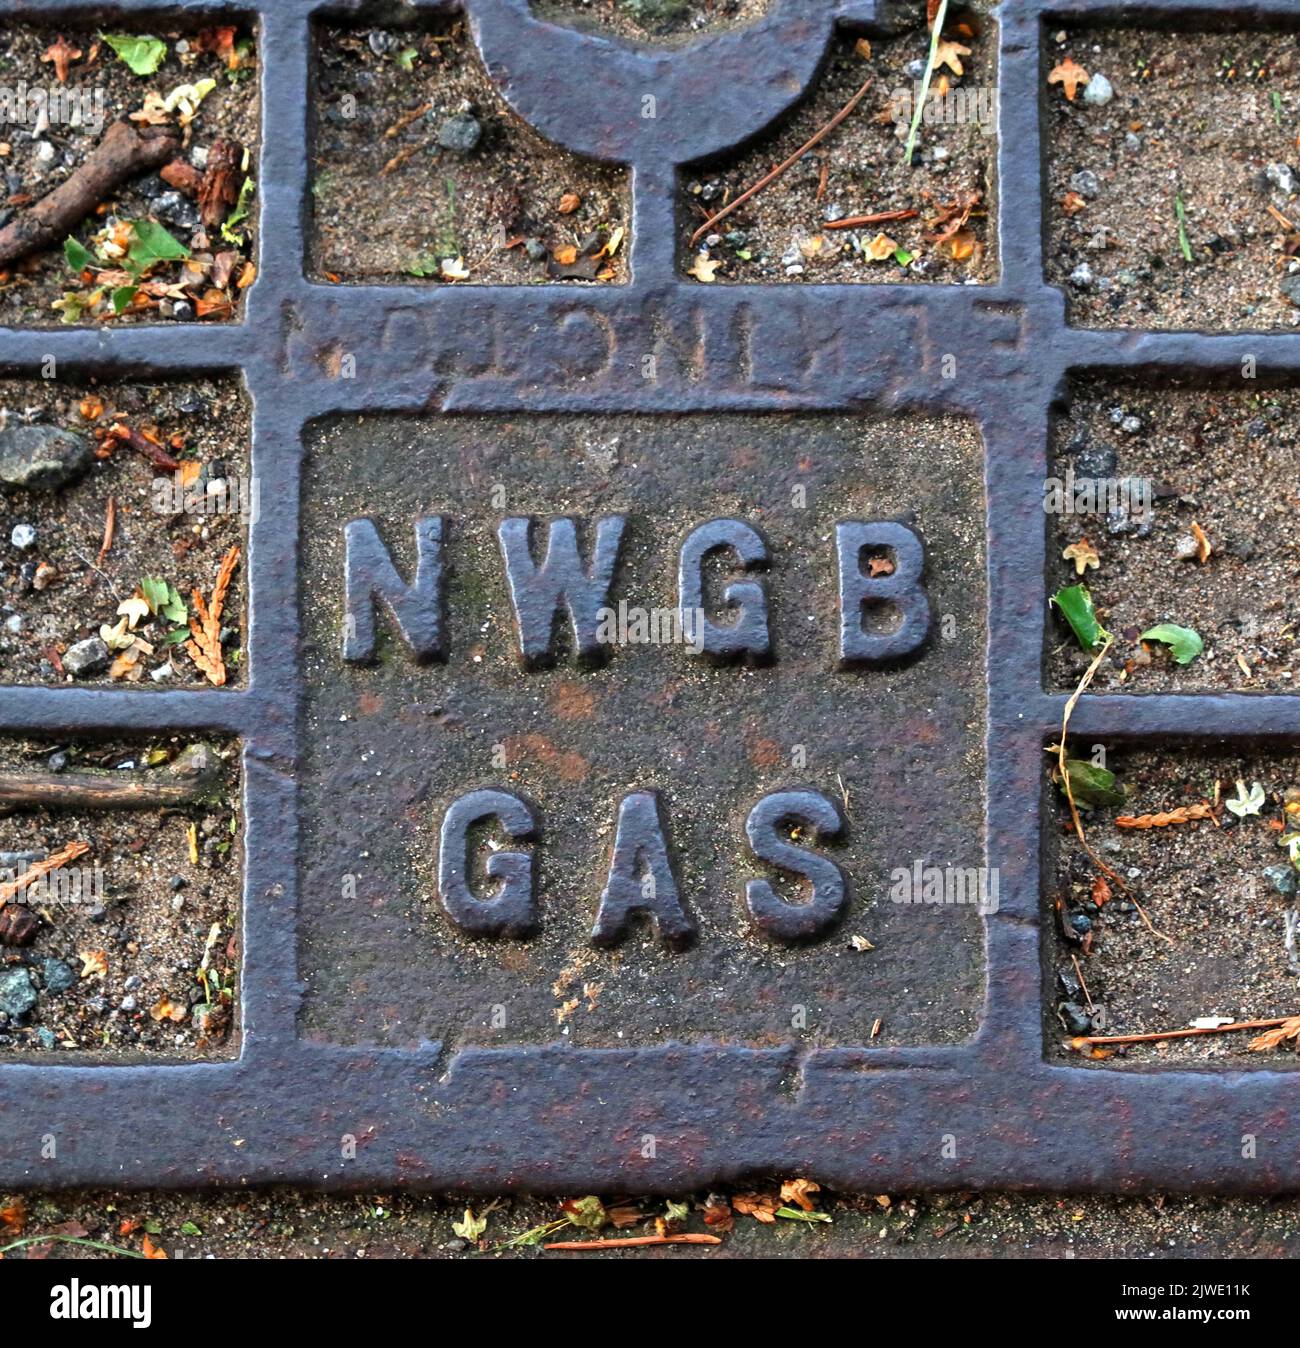 NWGB Gas - North West Gas Board Cover, calle, herrería, Grappenhall, Warrington, Cheshire, INGLATERRA, REINO UNIDO, WA4 2PL Foto de stock